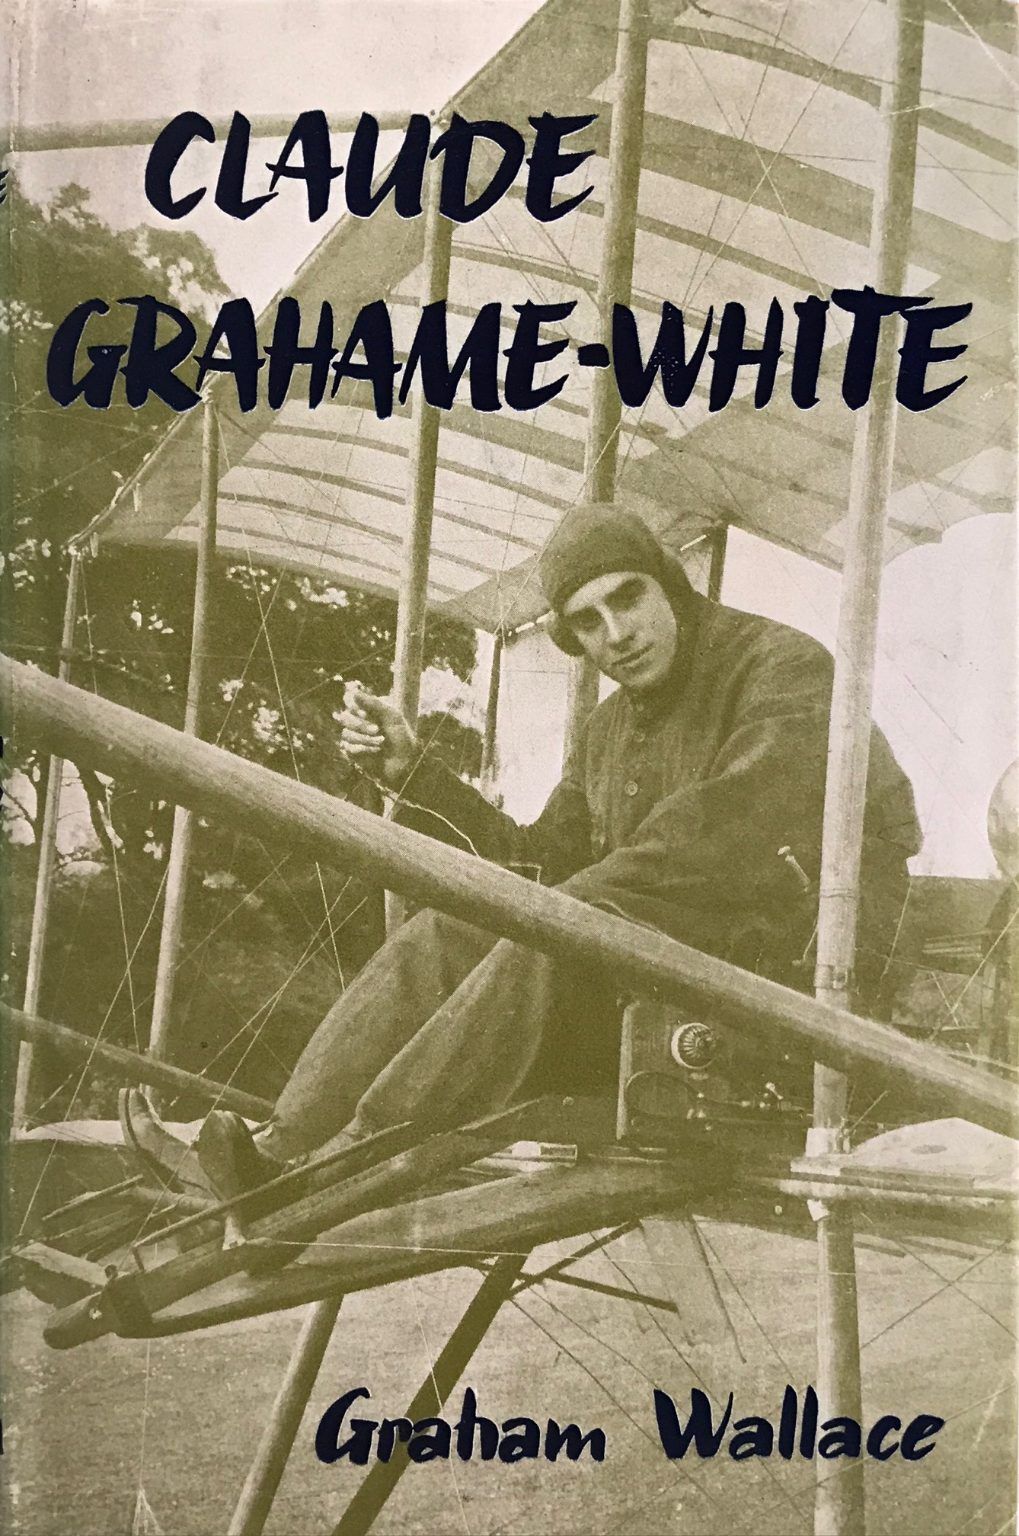 CLAUDE GRAHAME-WHITE: A Biography